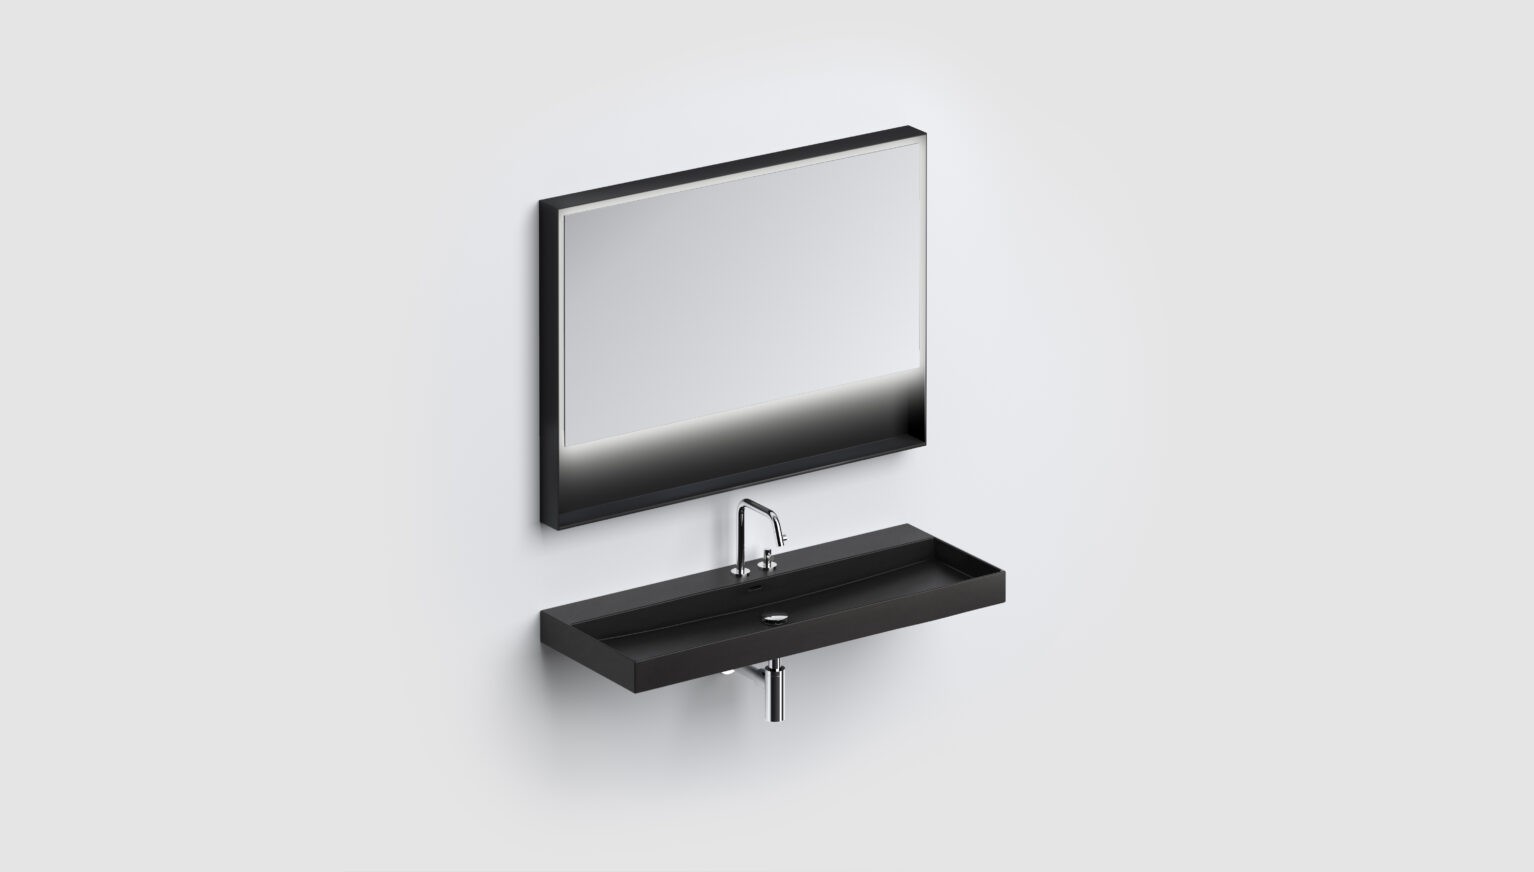 Spiegel-LED-verlichting-met-ophangsysteem-planchet-rechthoekig-110cm-80cm-zwart-toilet-badkamer-luxe-sanitair-Flat-clou-CL080811021-new-wash-me-wastafel-CL0230434-kaldur-kraan-CL061500329R